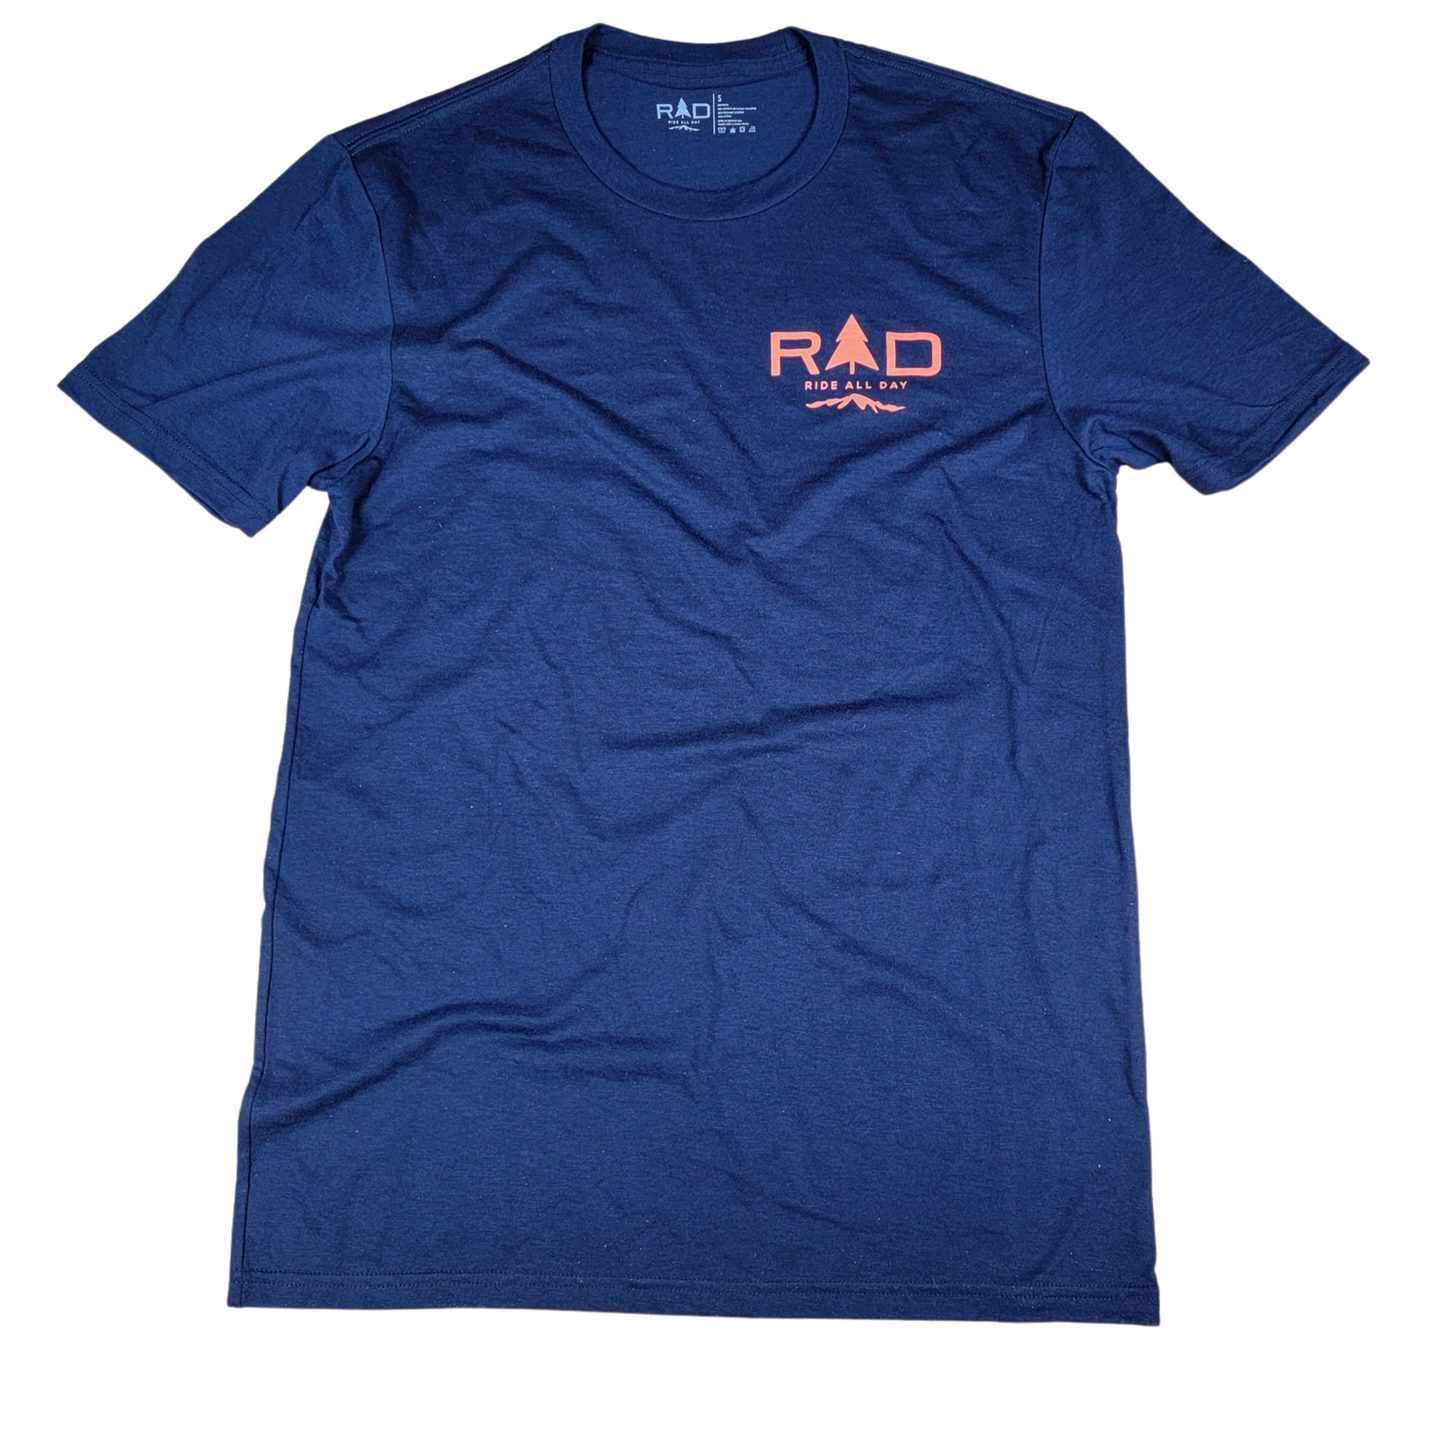 RAD navy and coral pocket logo tech tee